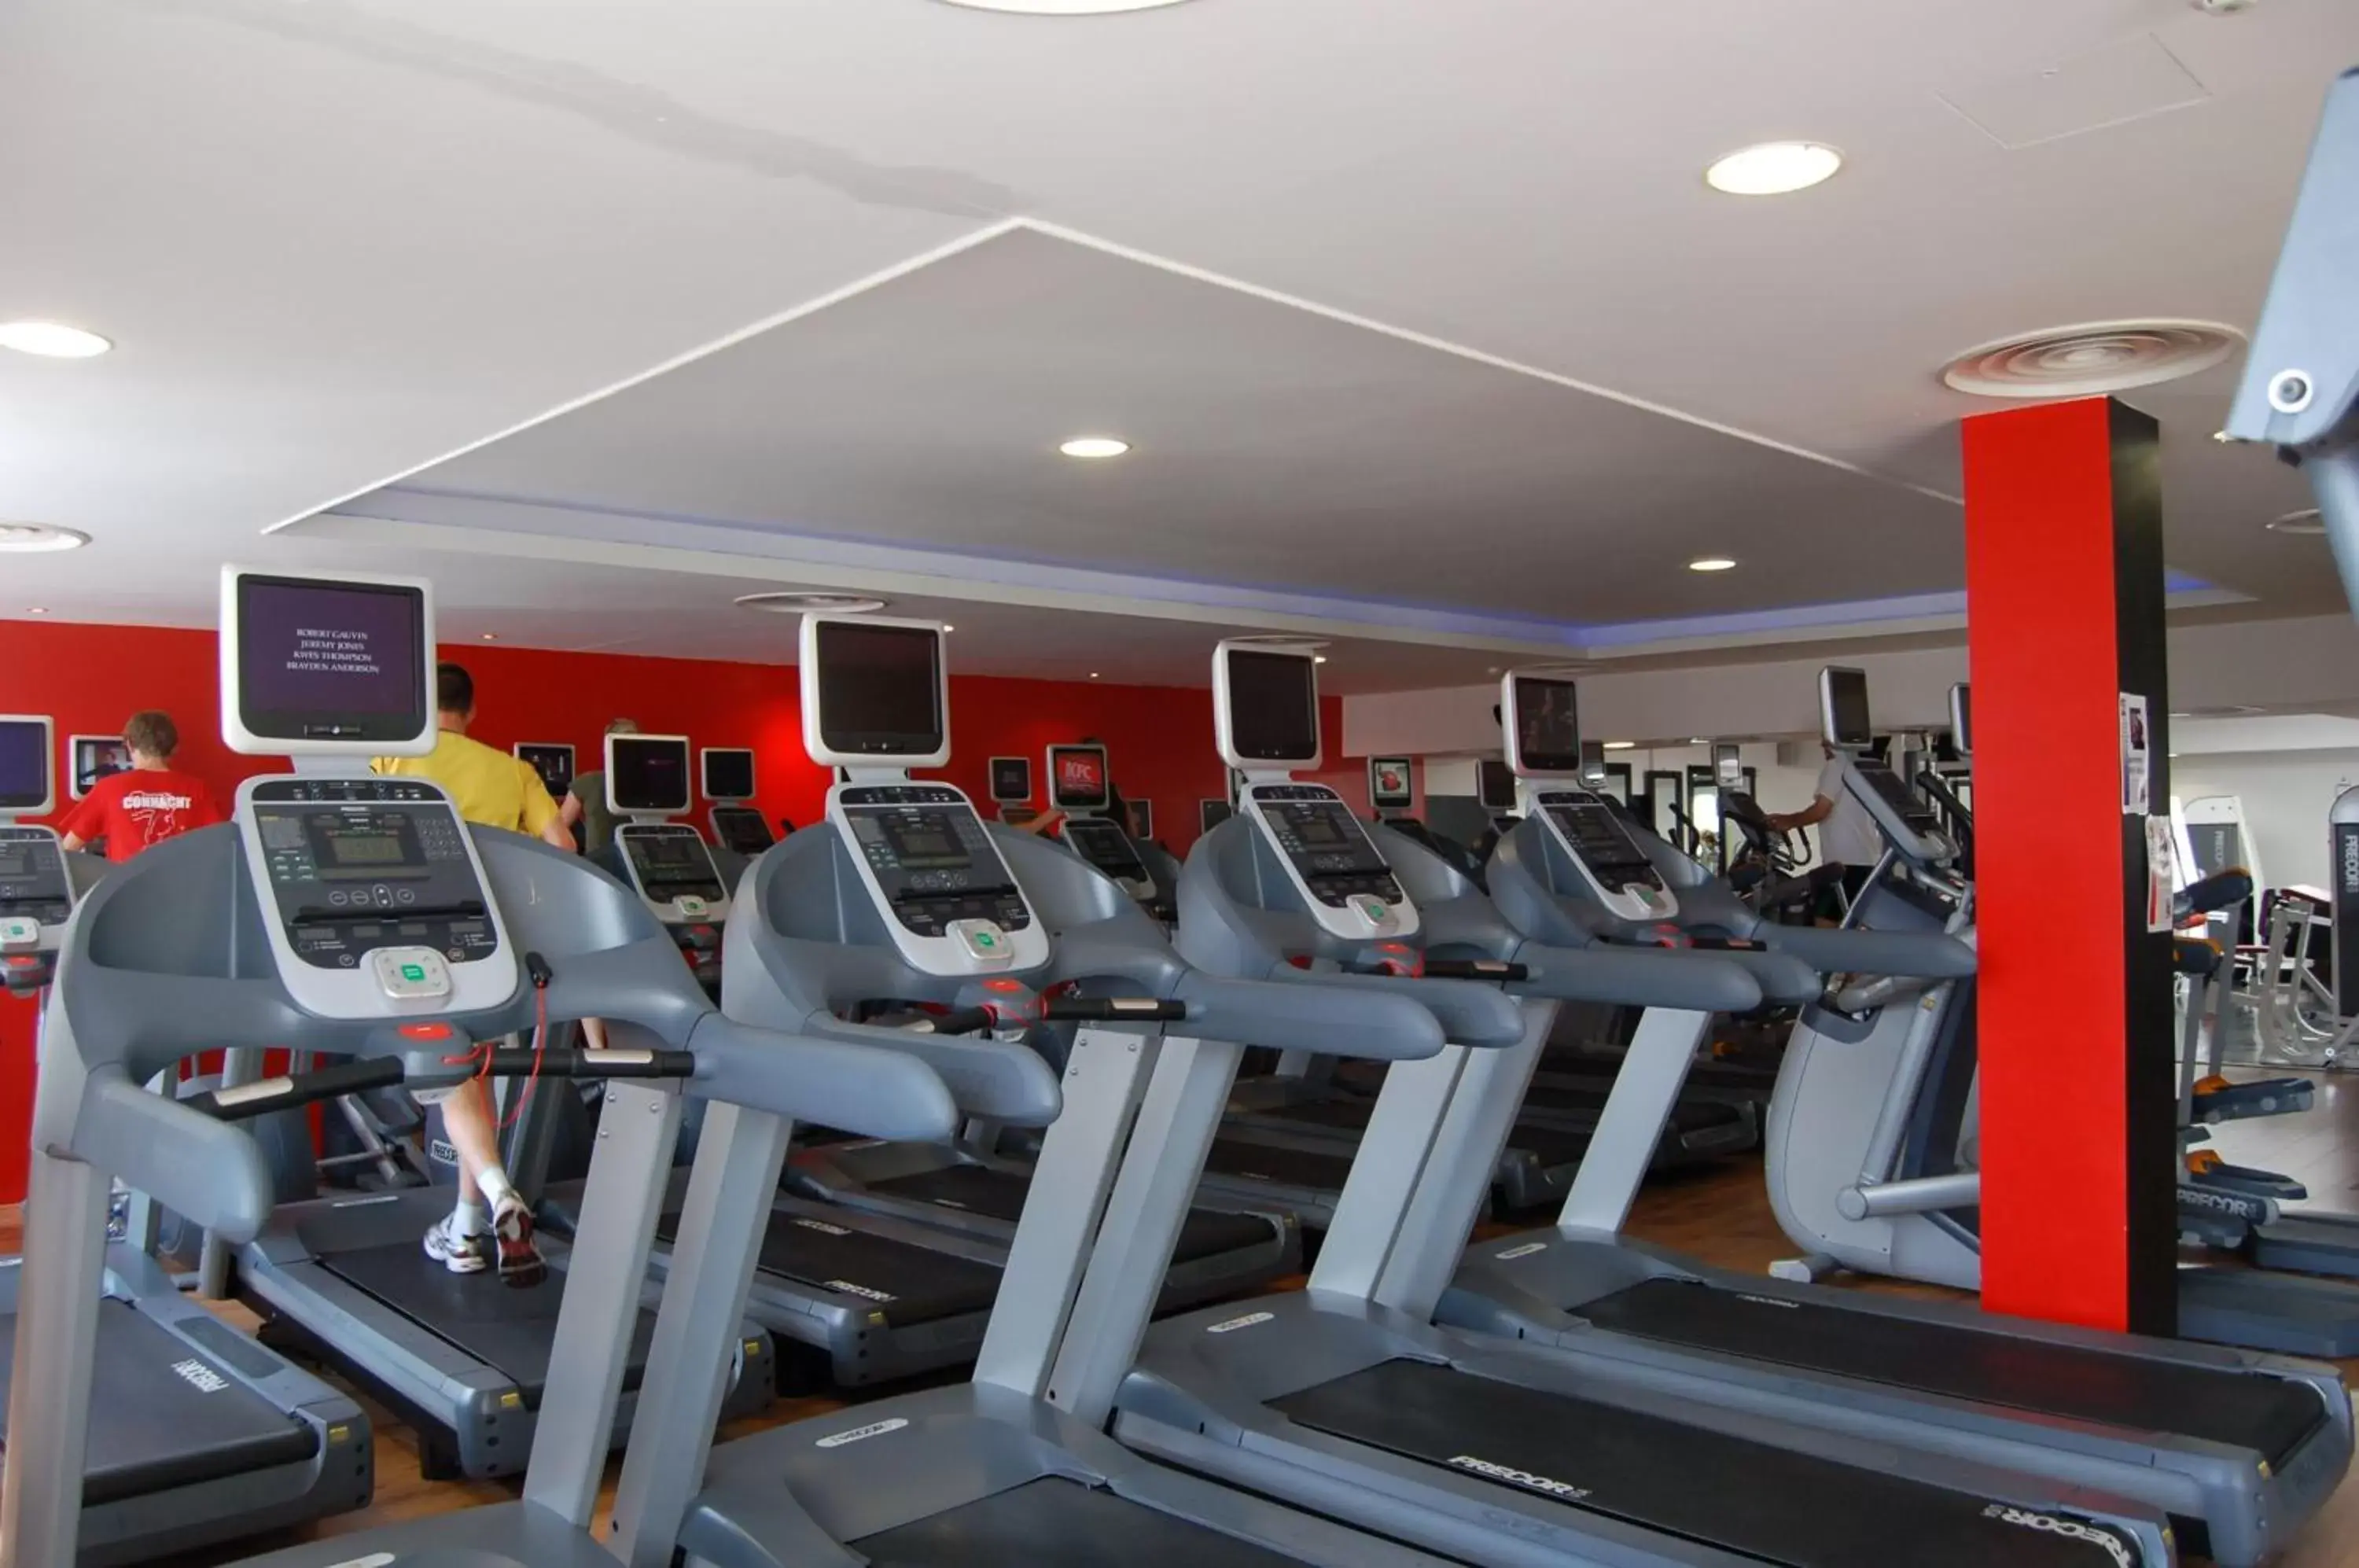 Fitness centre/facilities, Fitness Center/Facilities in Clybaun Hotel